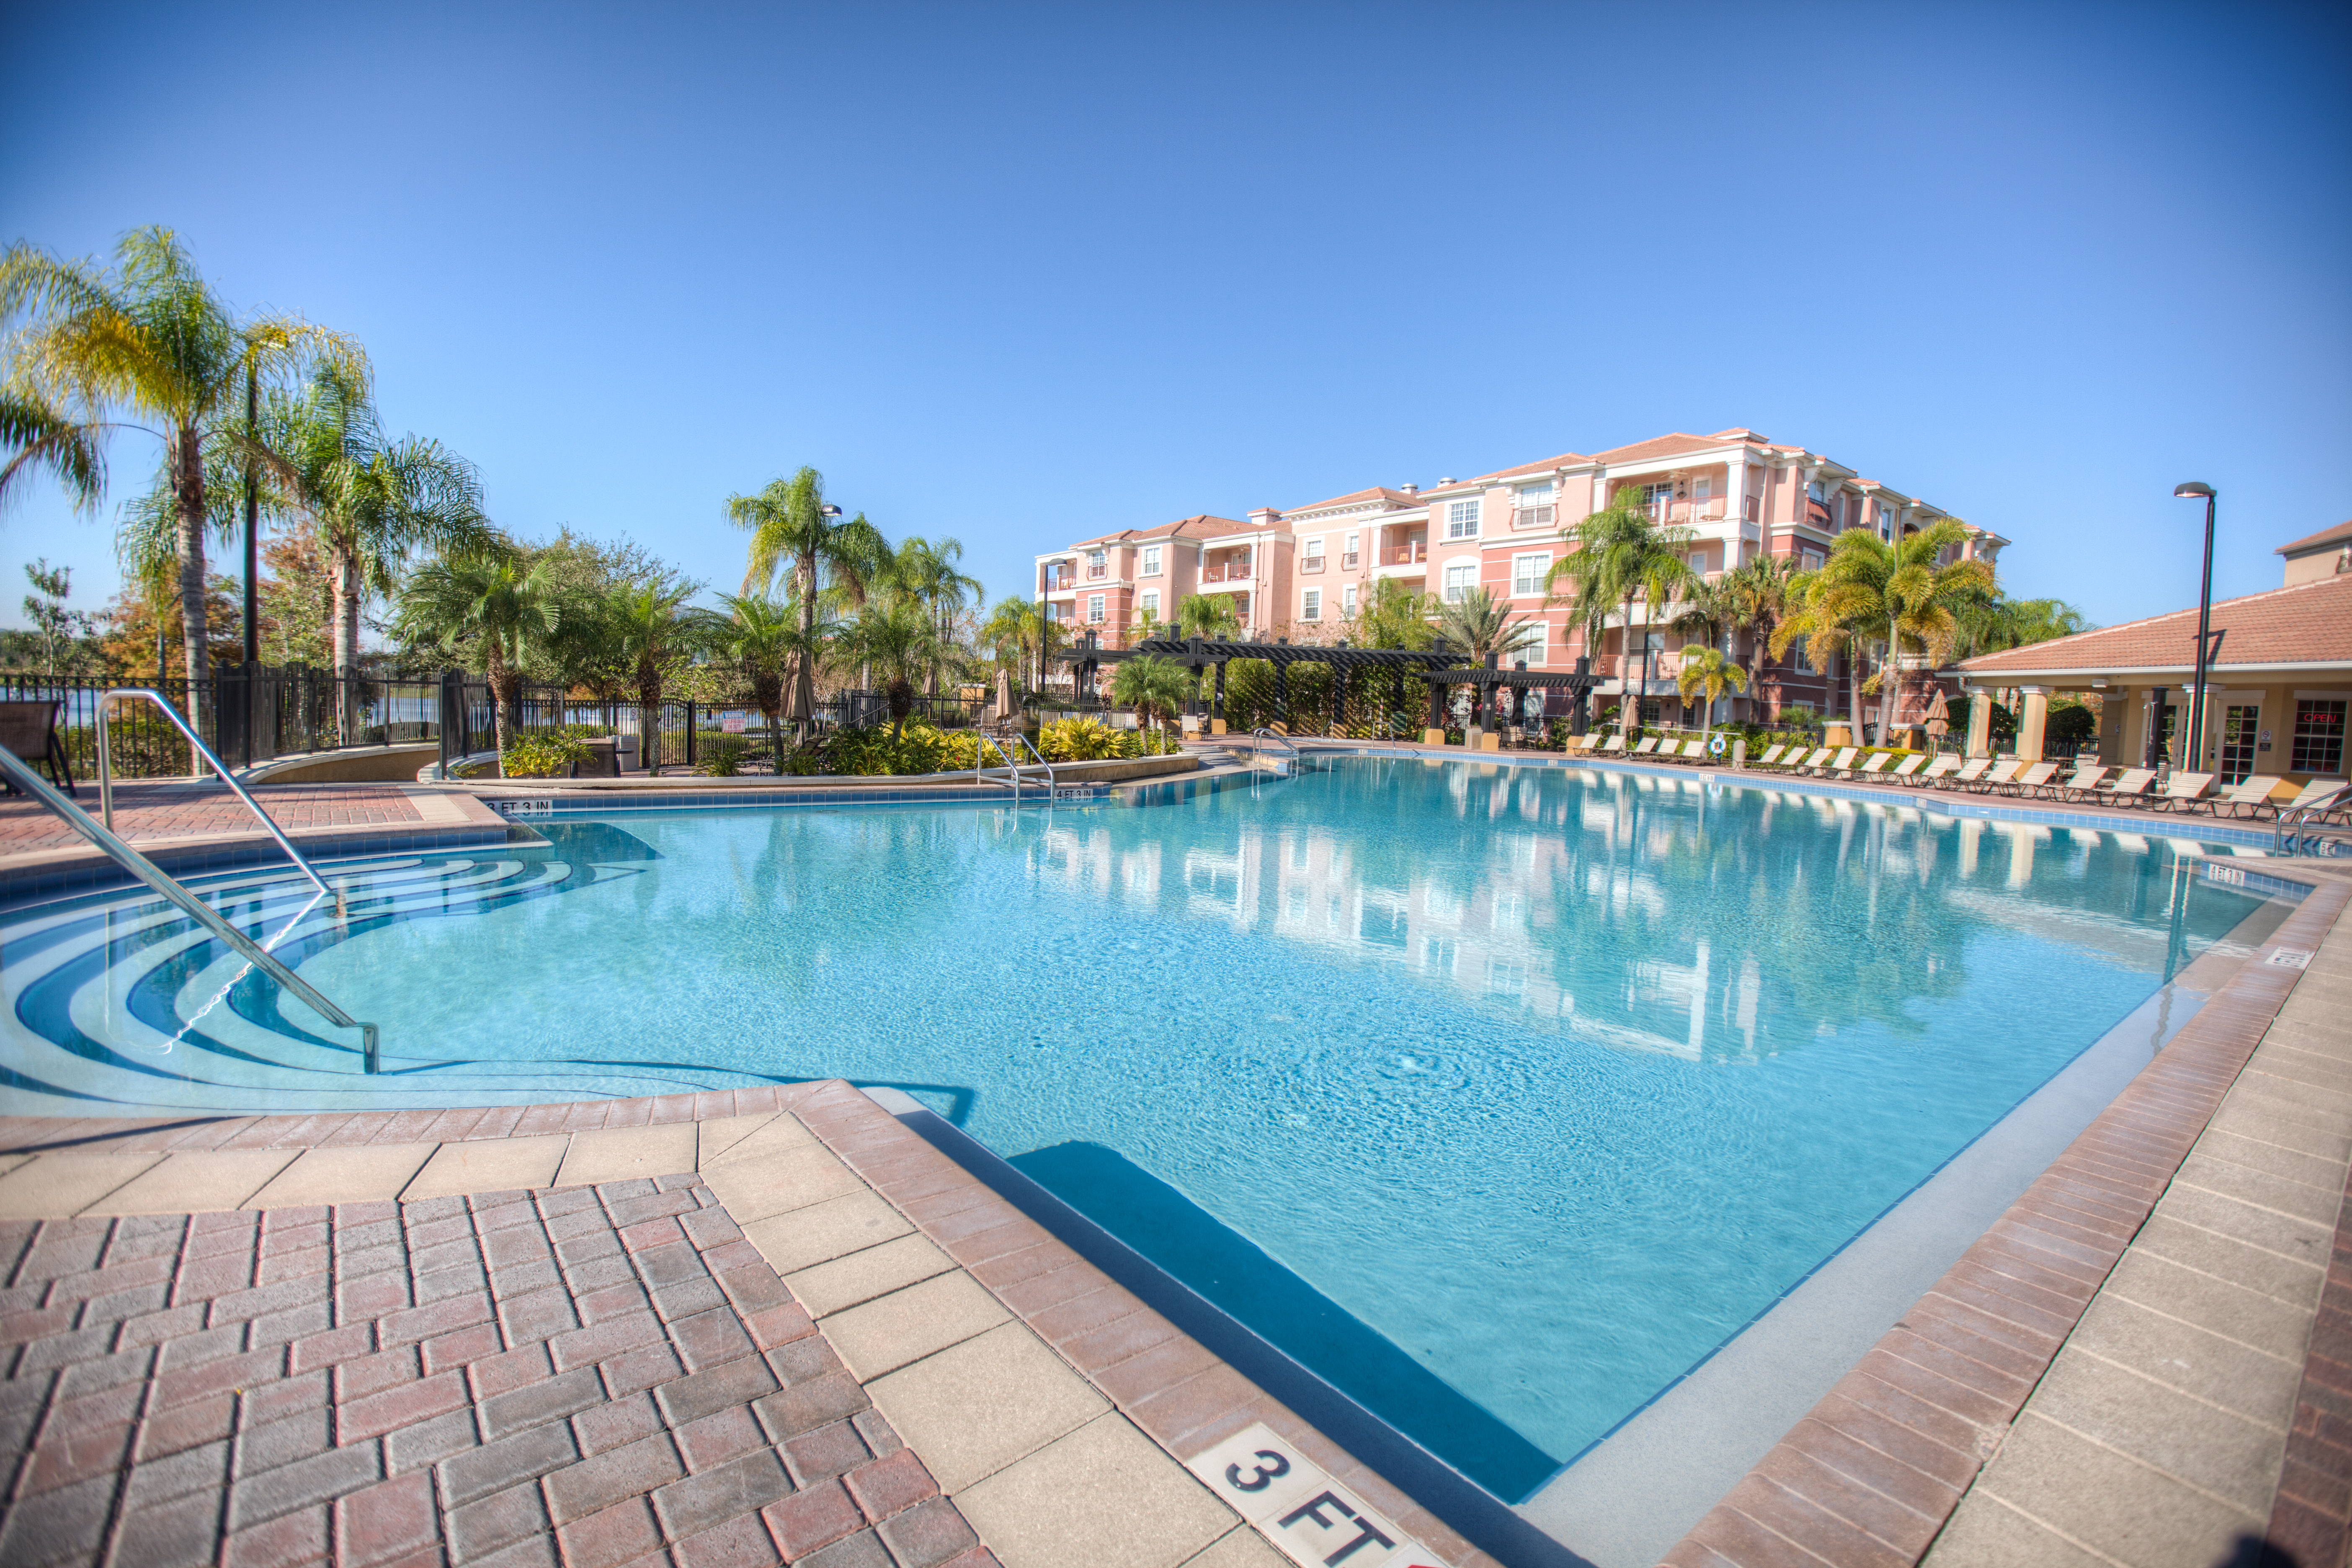 Vista Cay Resort pool